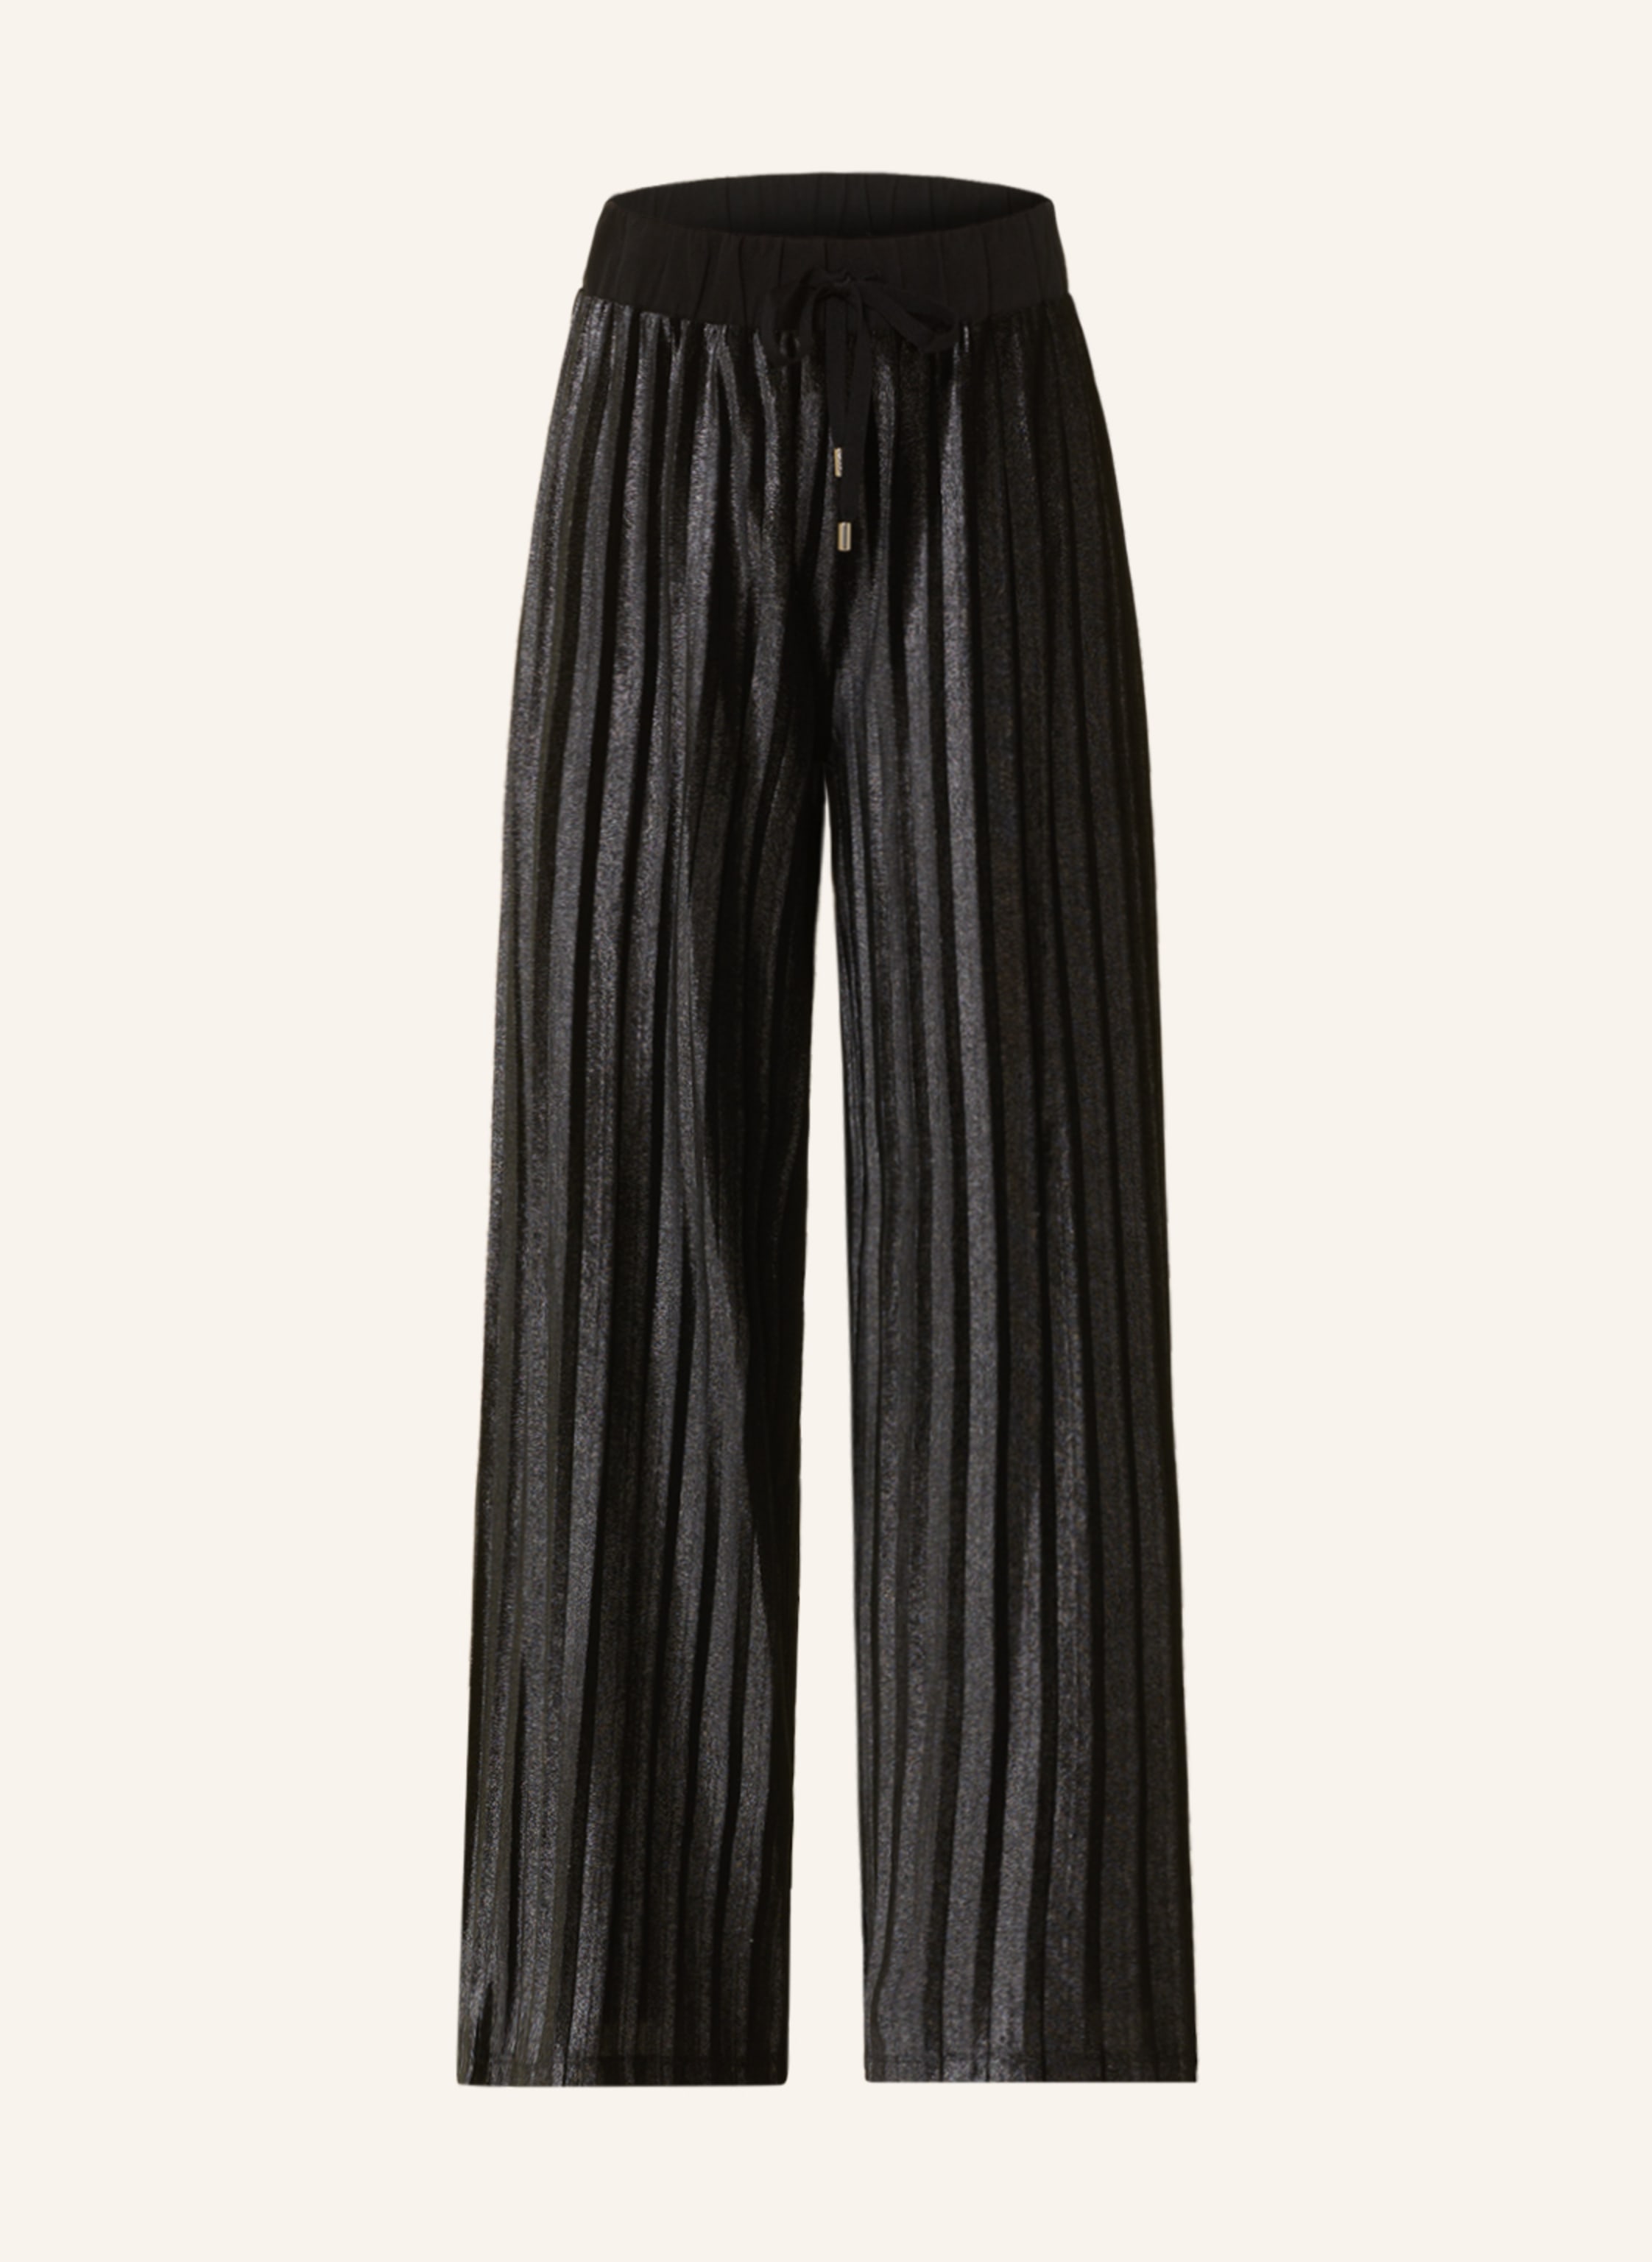 LIU JO Pleated trousers with glitter thread in black